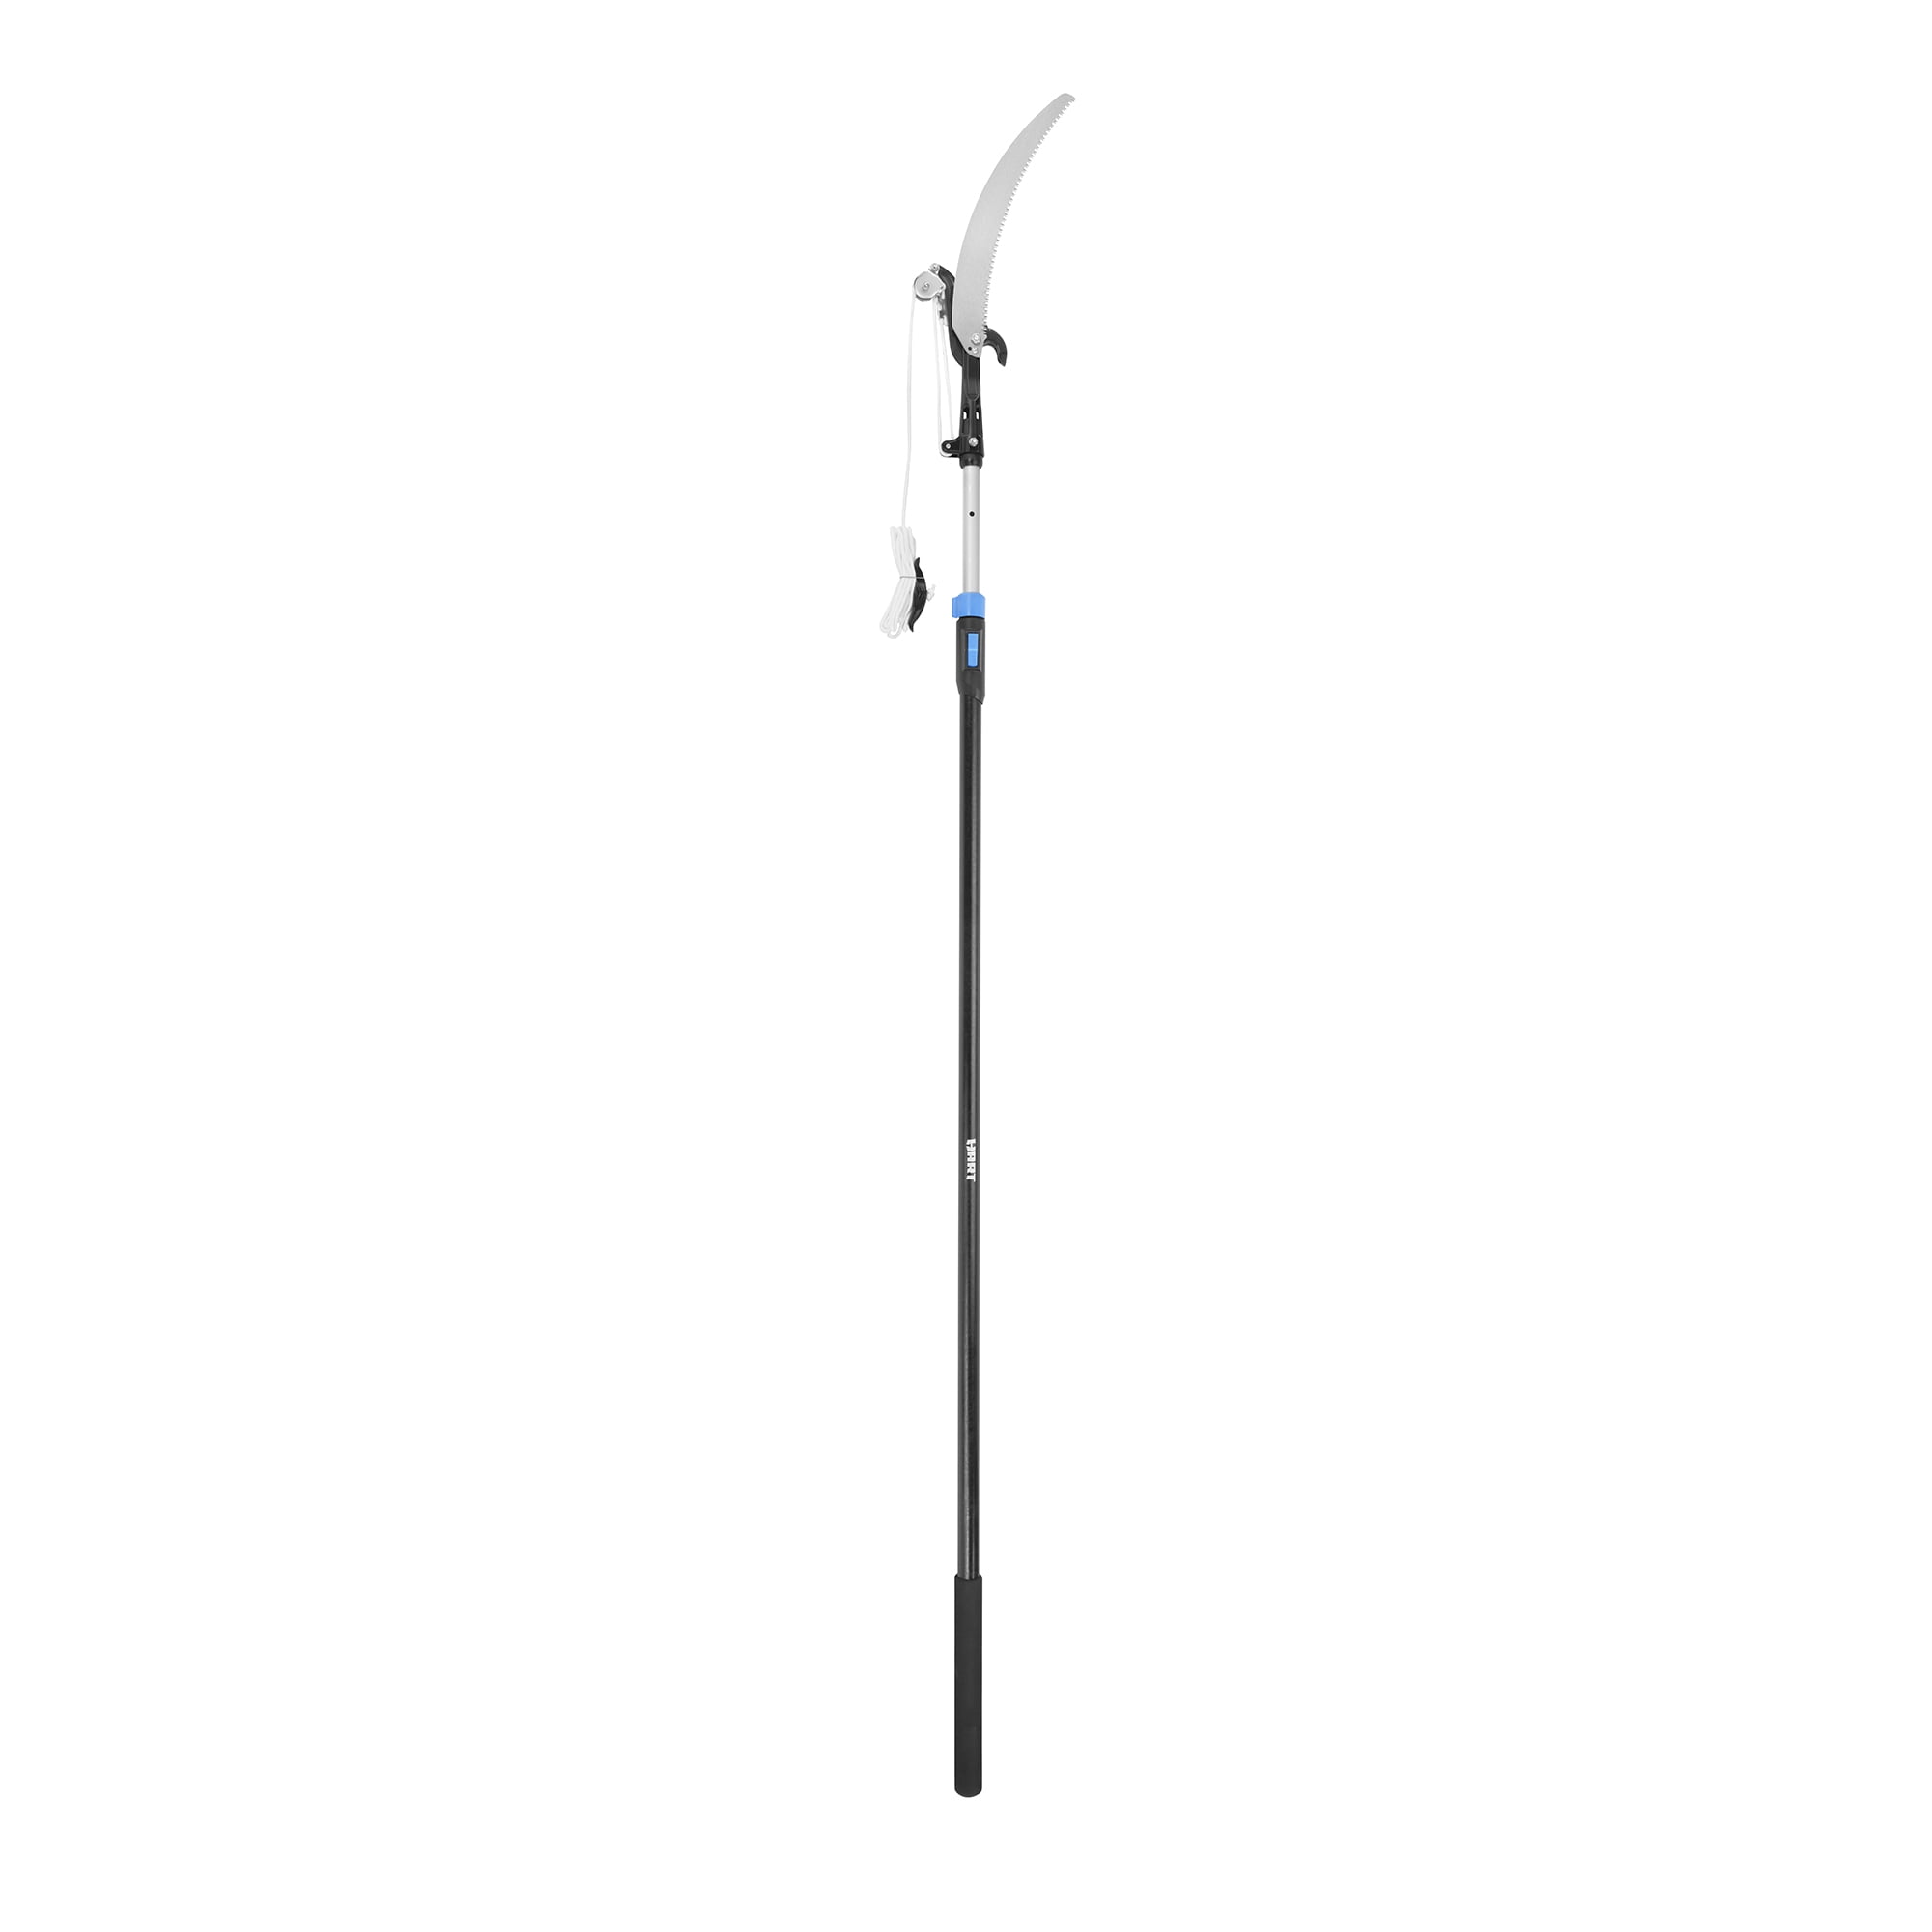 HART 12-Foot Extendable Handle Pole Tree Pruner with Fiberglass Handle and Ergonomic Cushion Grip